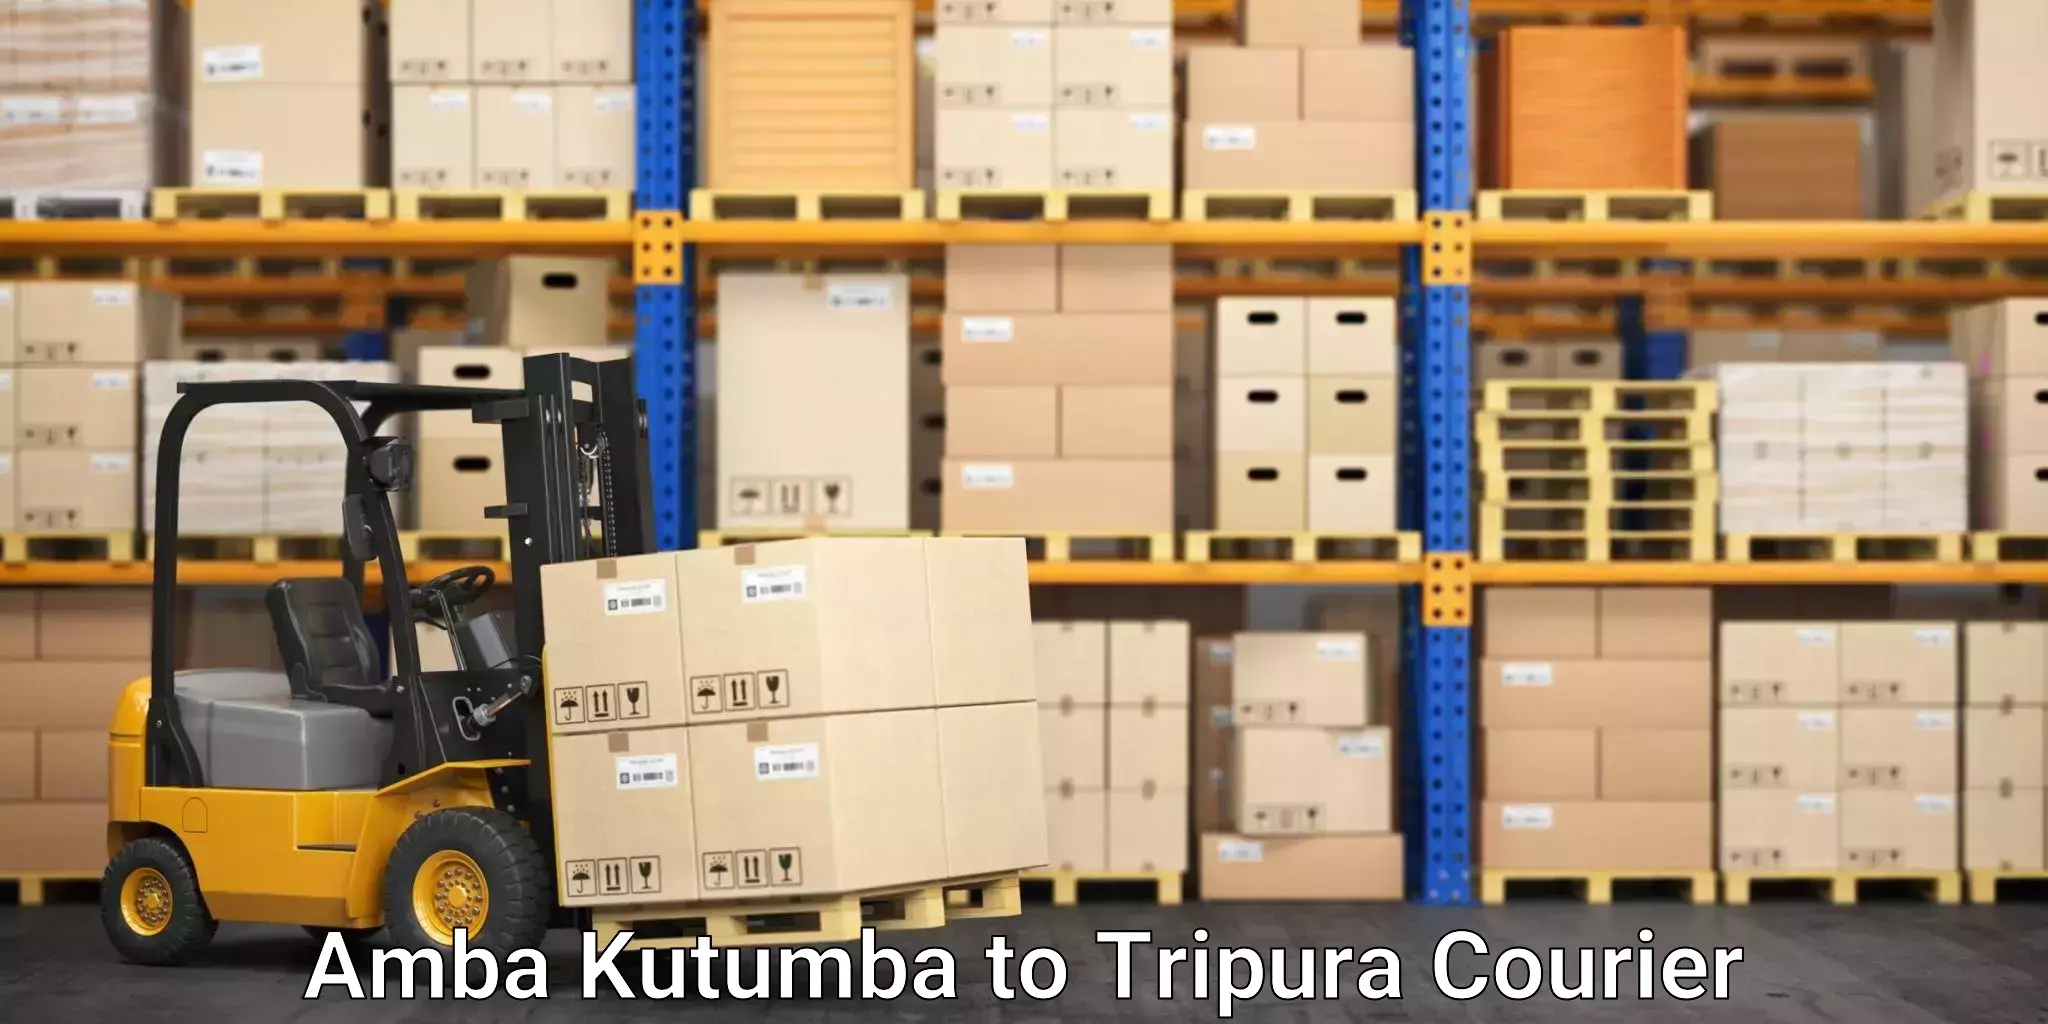 Efficient moving and packing Amba Kutumba to Tripura